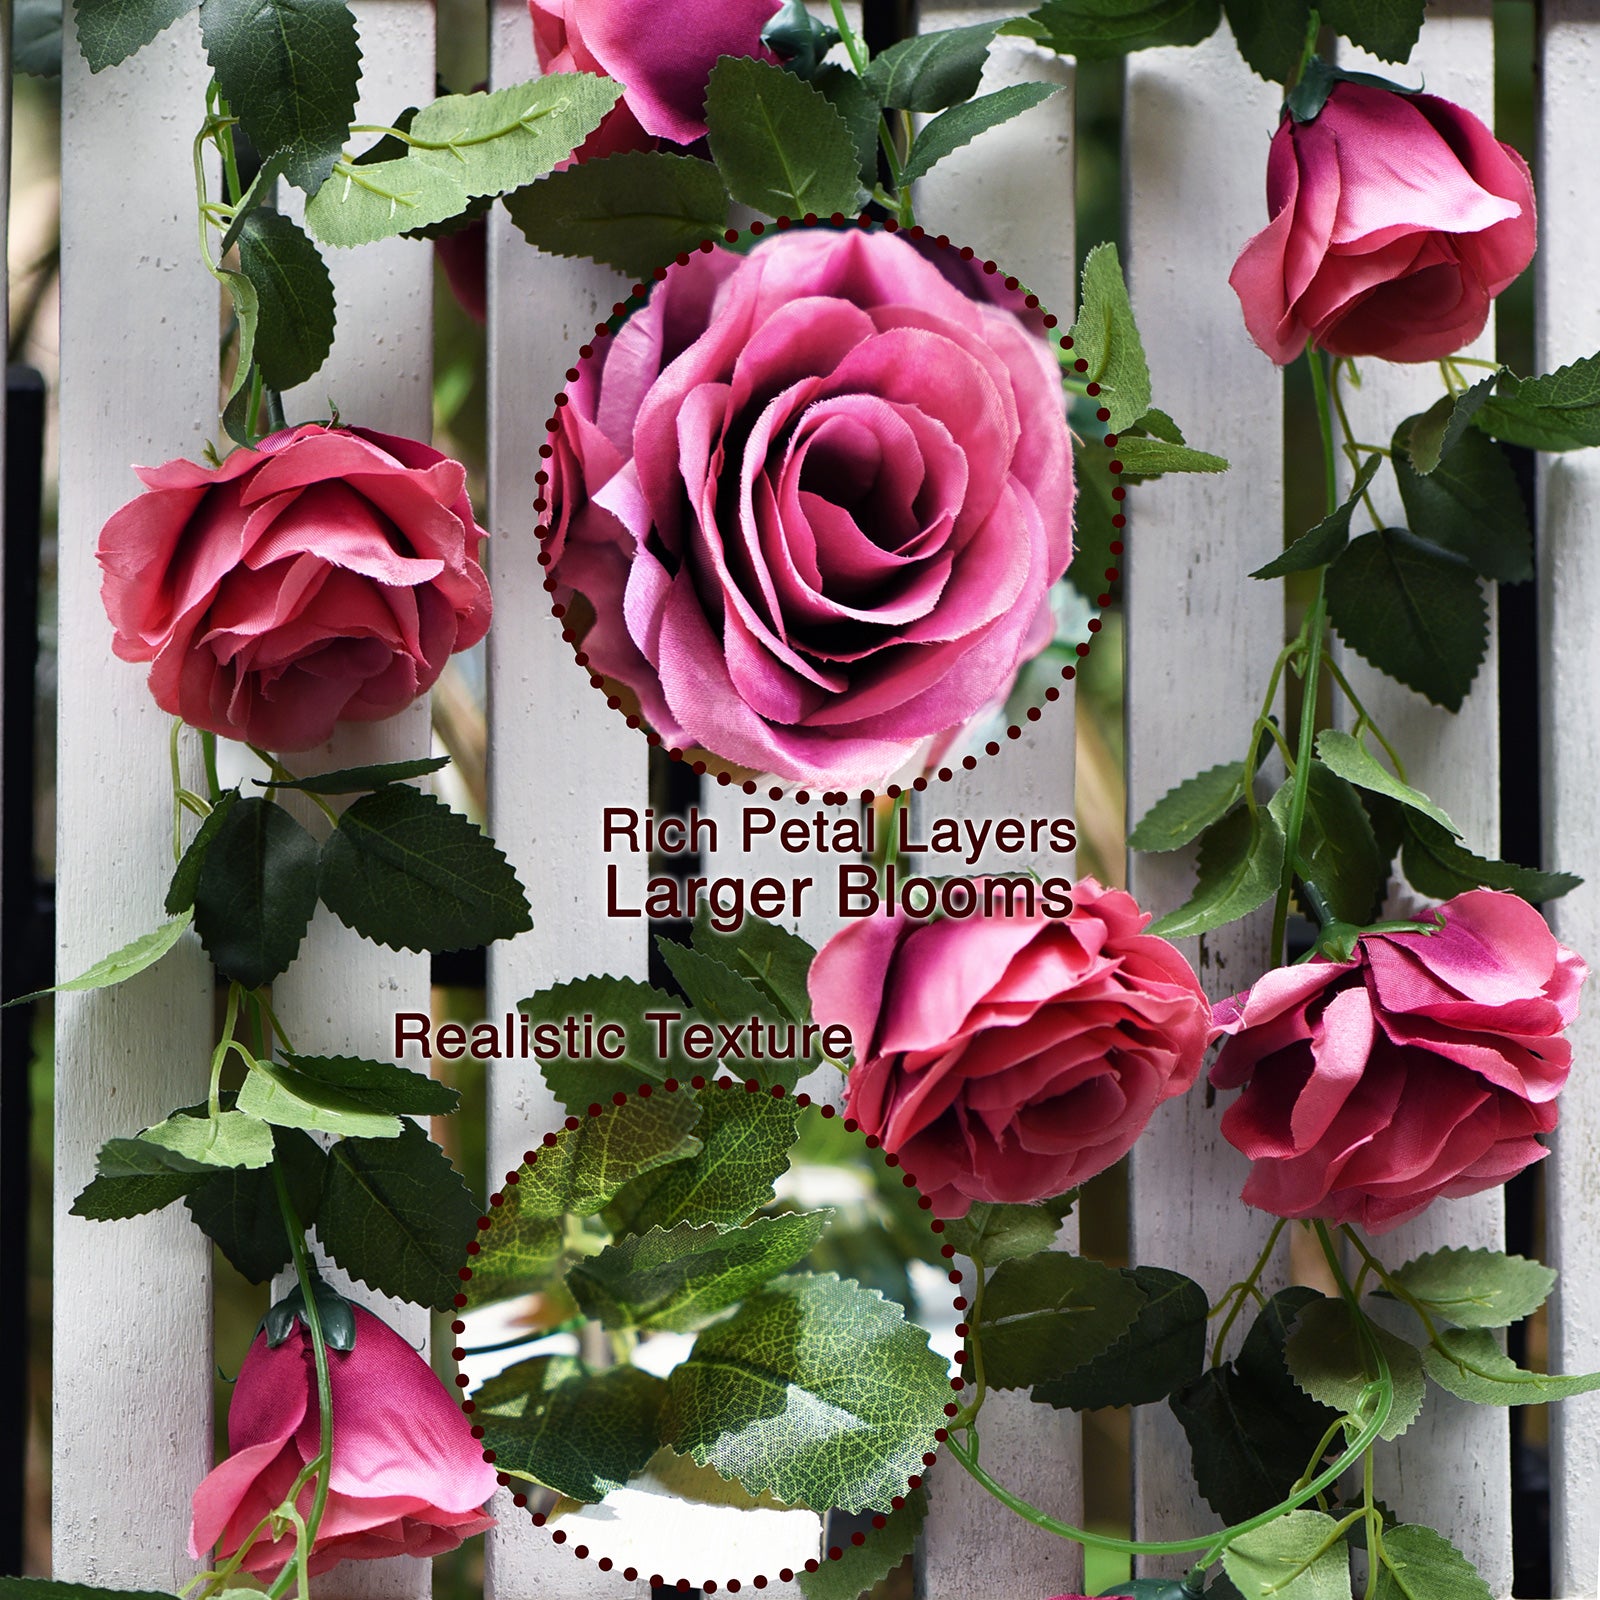 2 Pcs Raspberry Pink Artificial Silk Rose Garland Vine Plant Flower Leaves